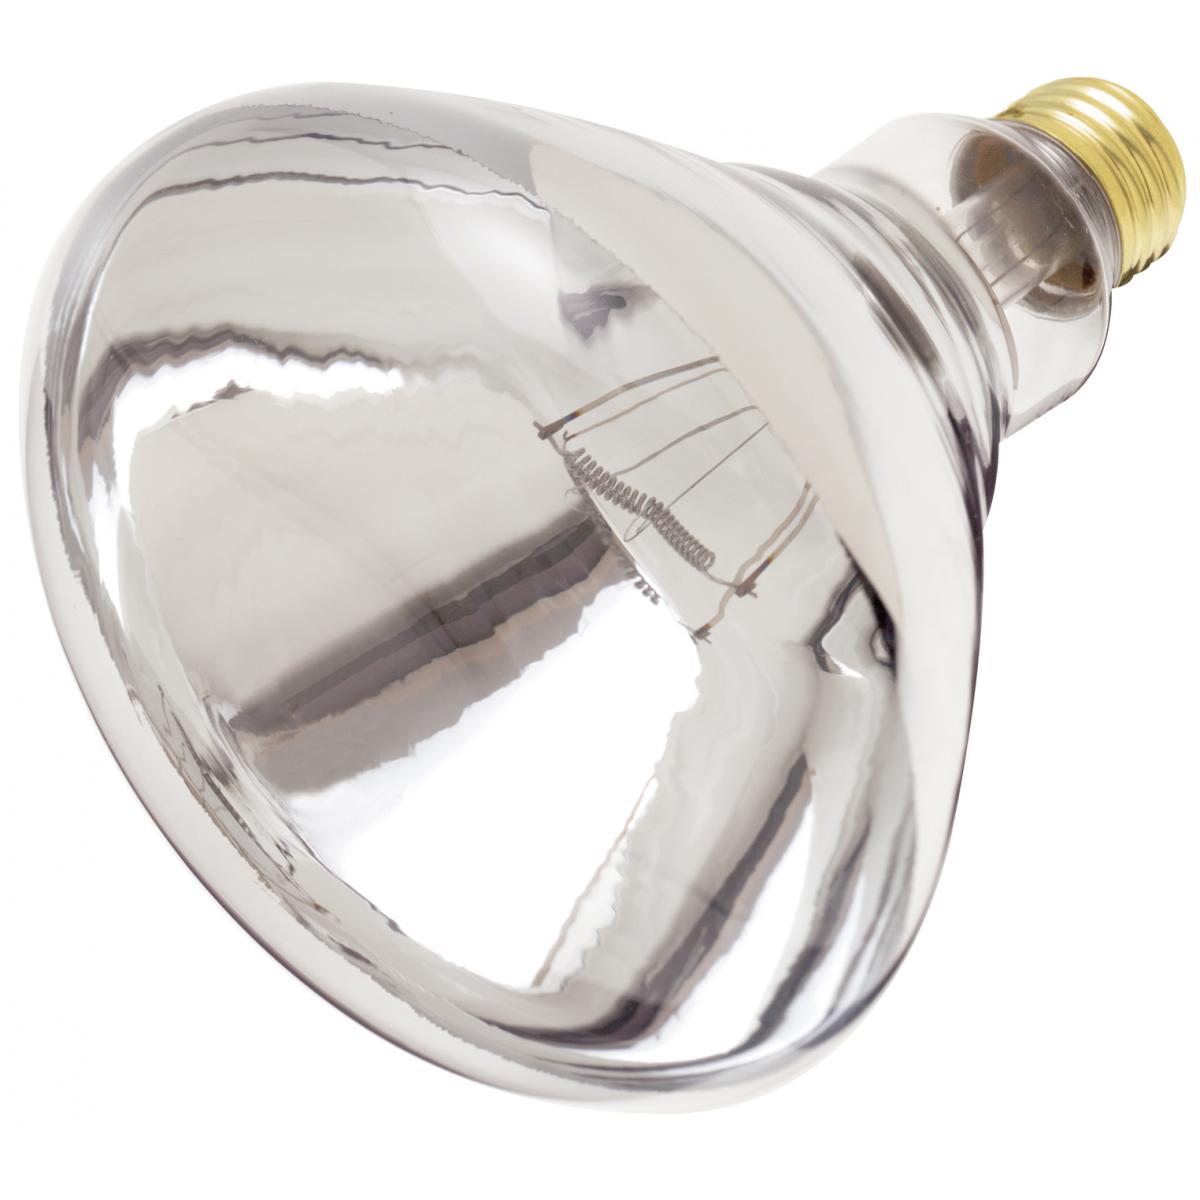 S4999 250R40/1 CLEAR HEAT LAMP